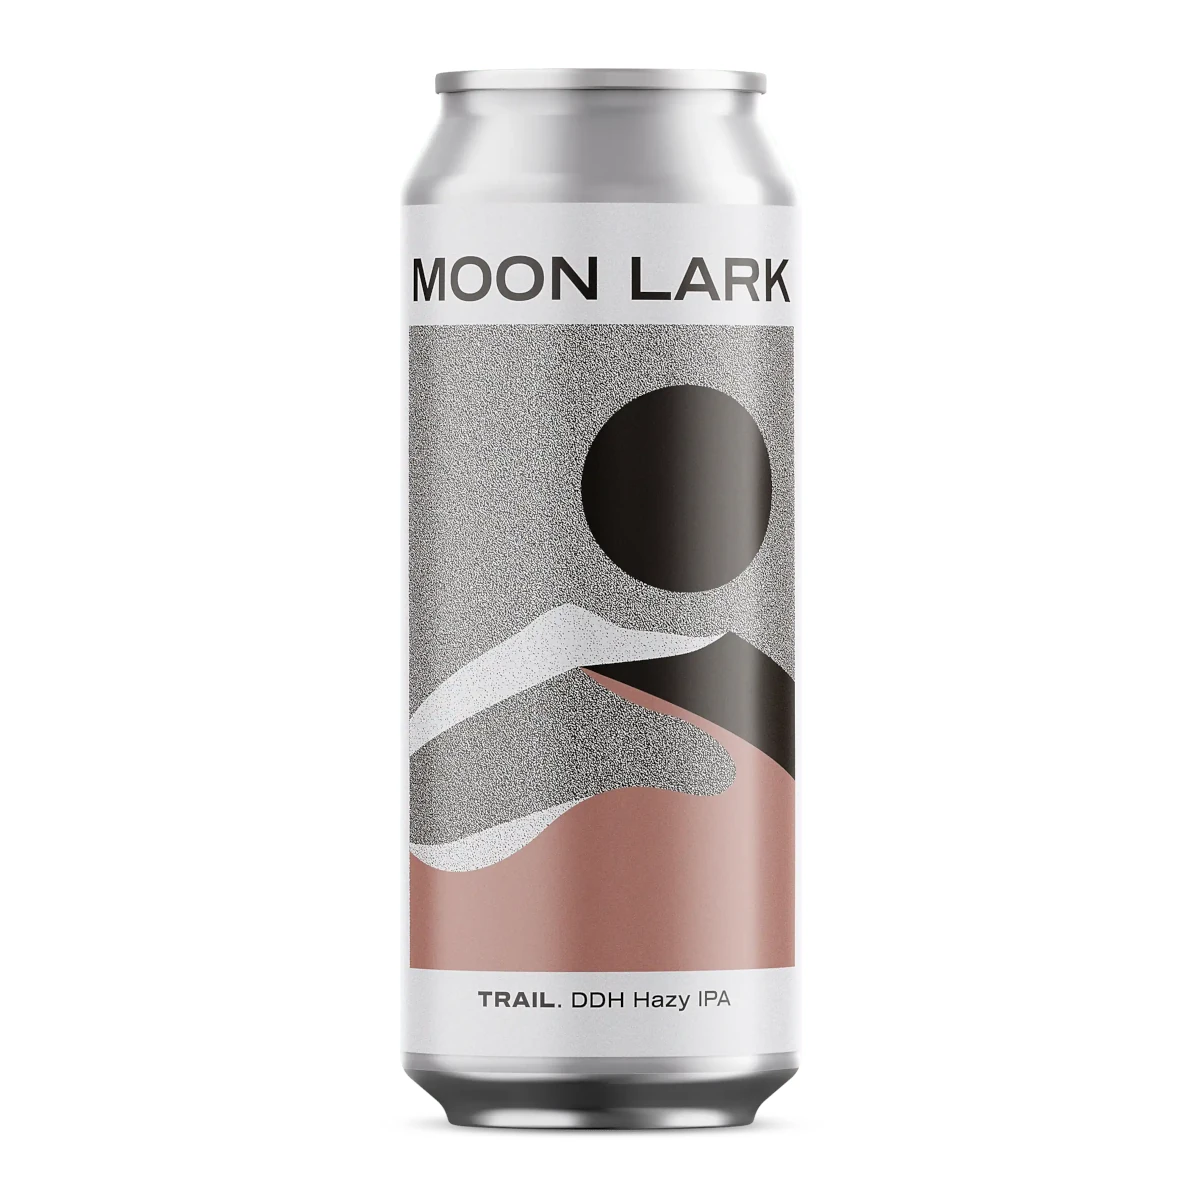 Moon Lark TRAIL – DDH Hazy IPA